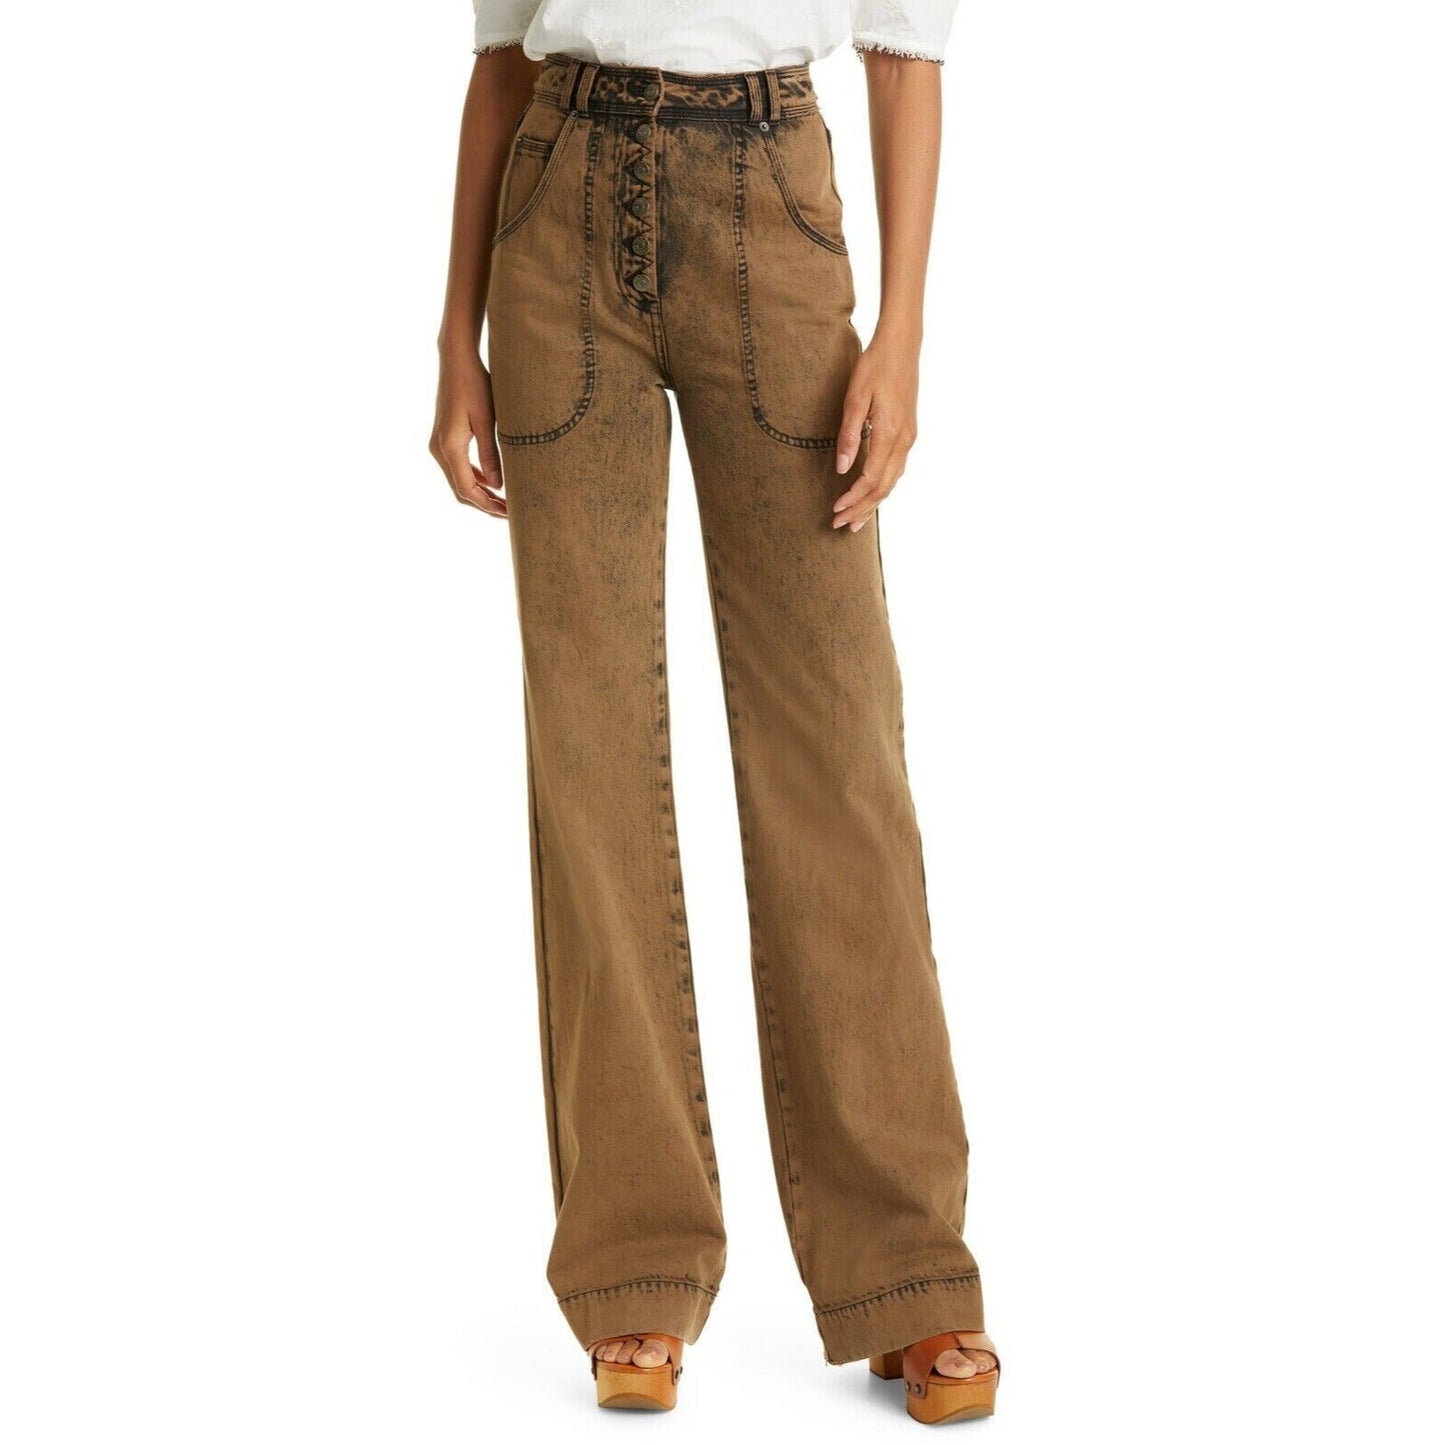 ULLA JOHNSON Women’s Milo High-Waist Flare Jeans Desert Palm Size 10 $425 NEW